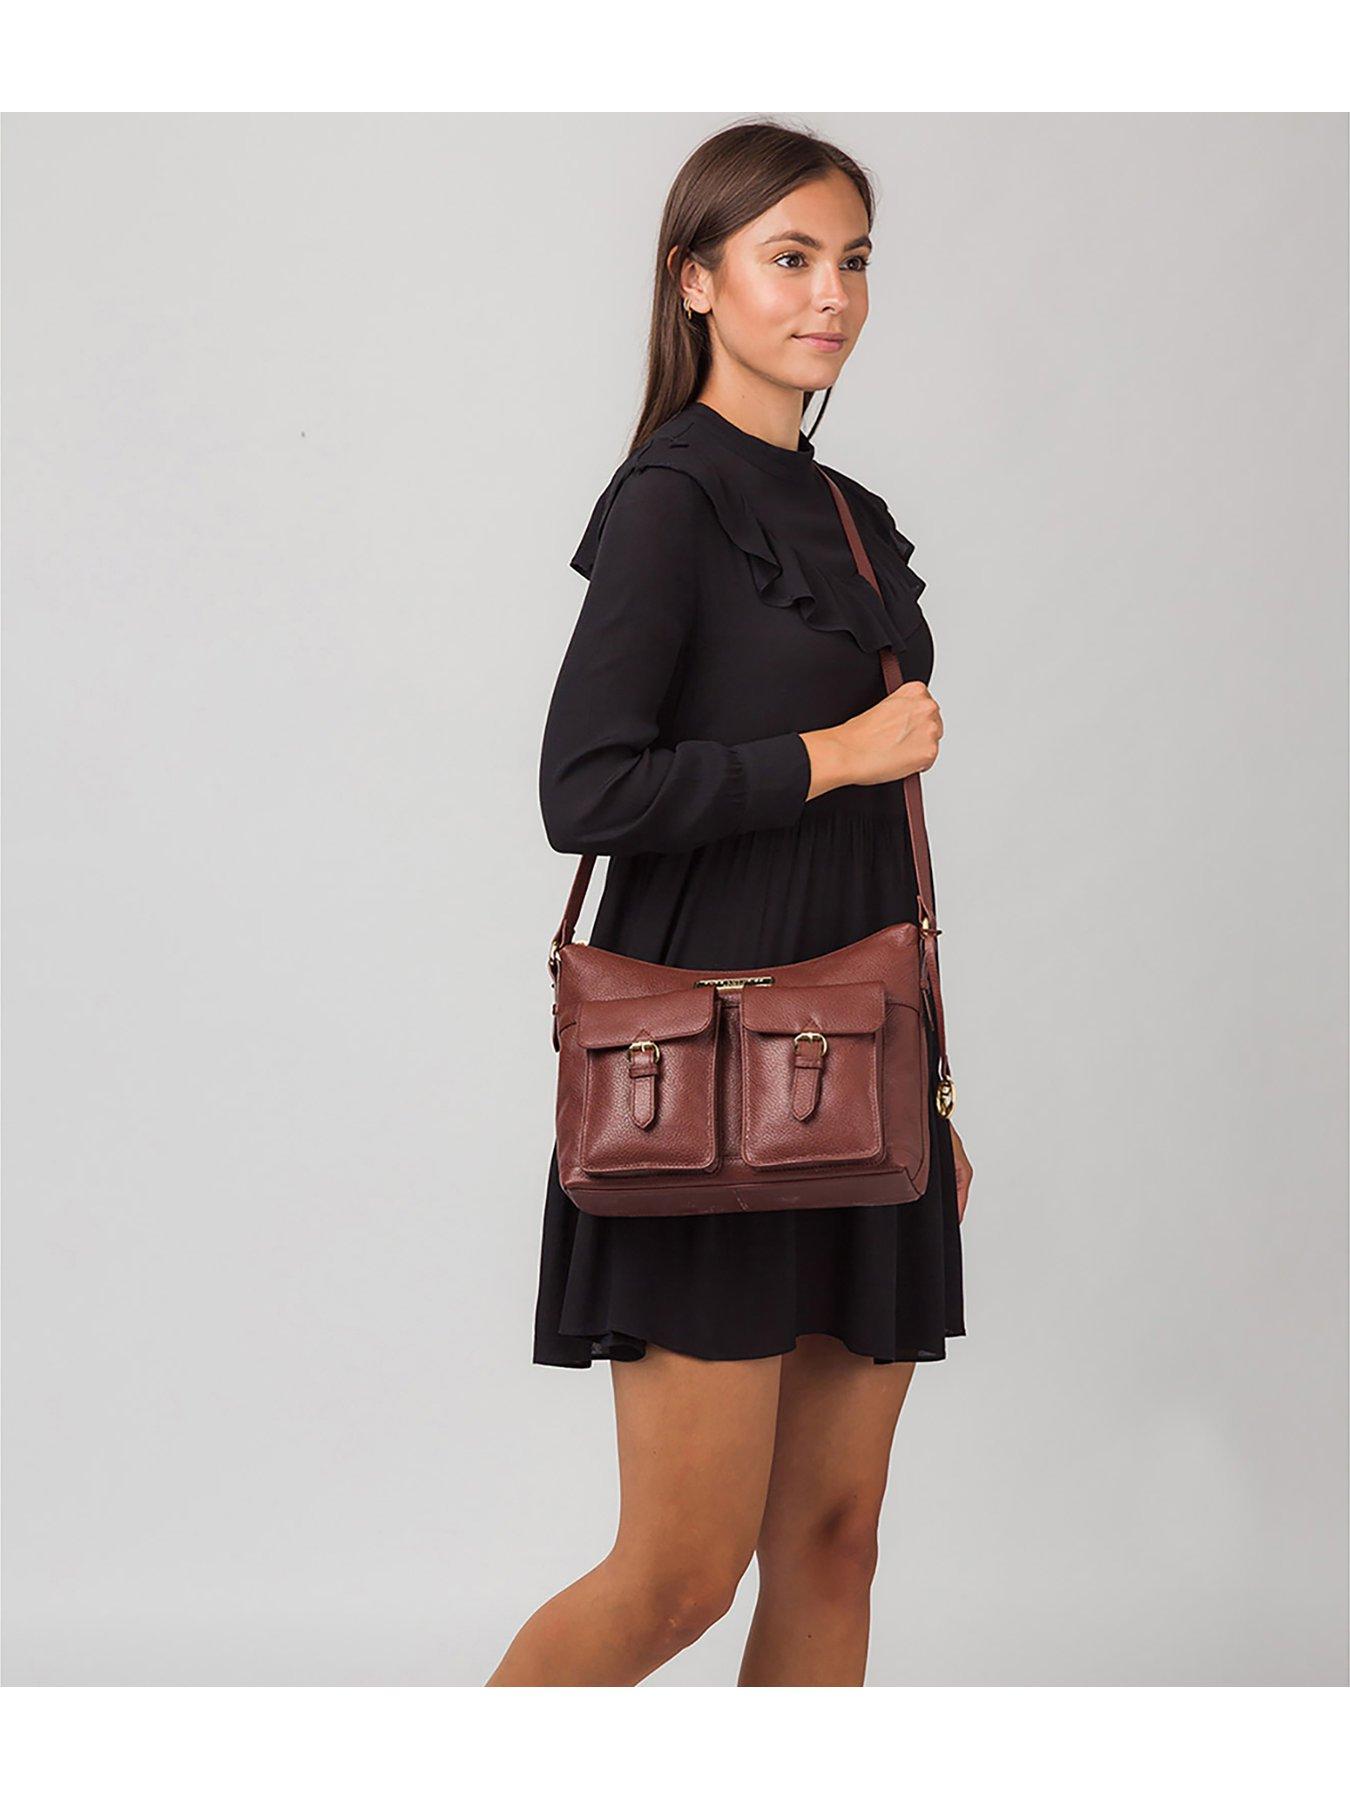 Bags & Purses Jenna Zip Top Leather Crossbody Bag - Chestnut